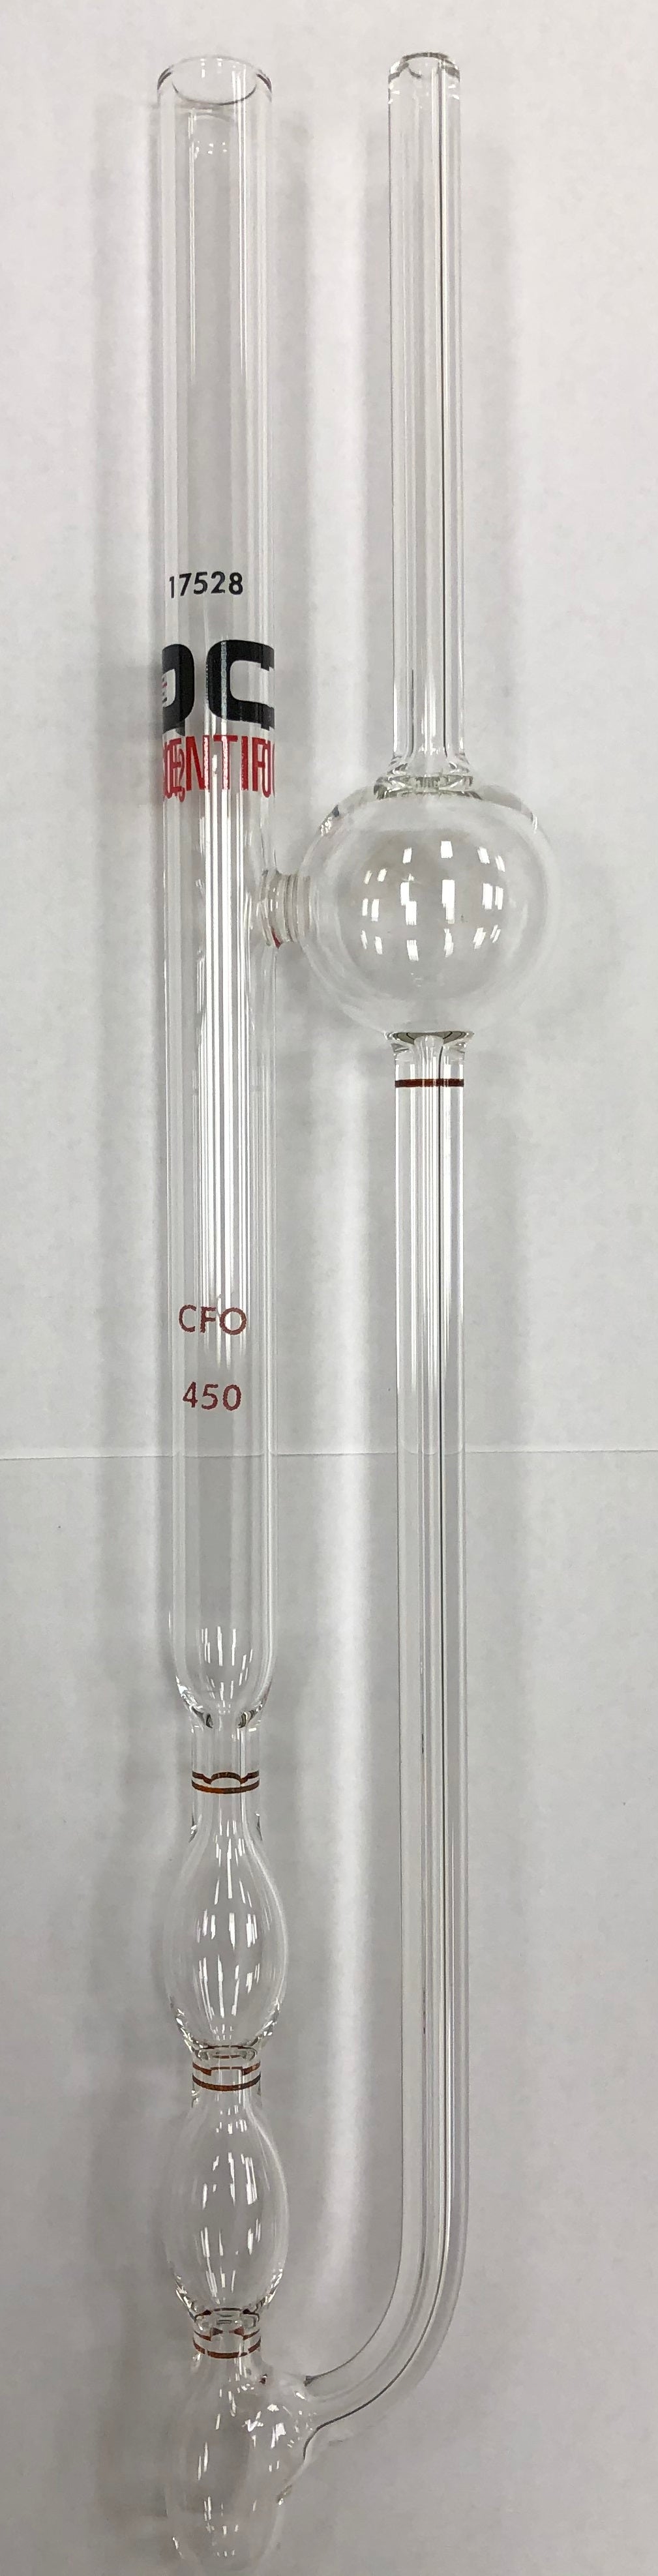 CFO Fenske Opaque Viscometer Tube ISO 17025:2017 Calibrated ASTM D445